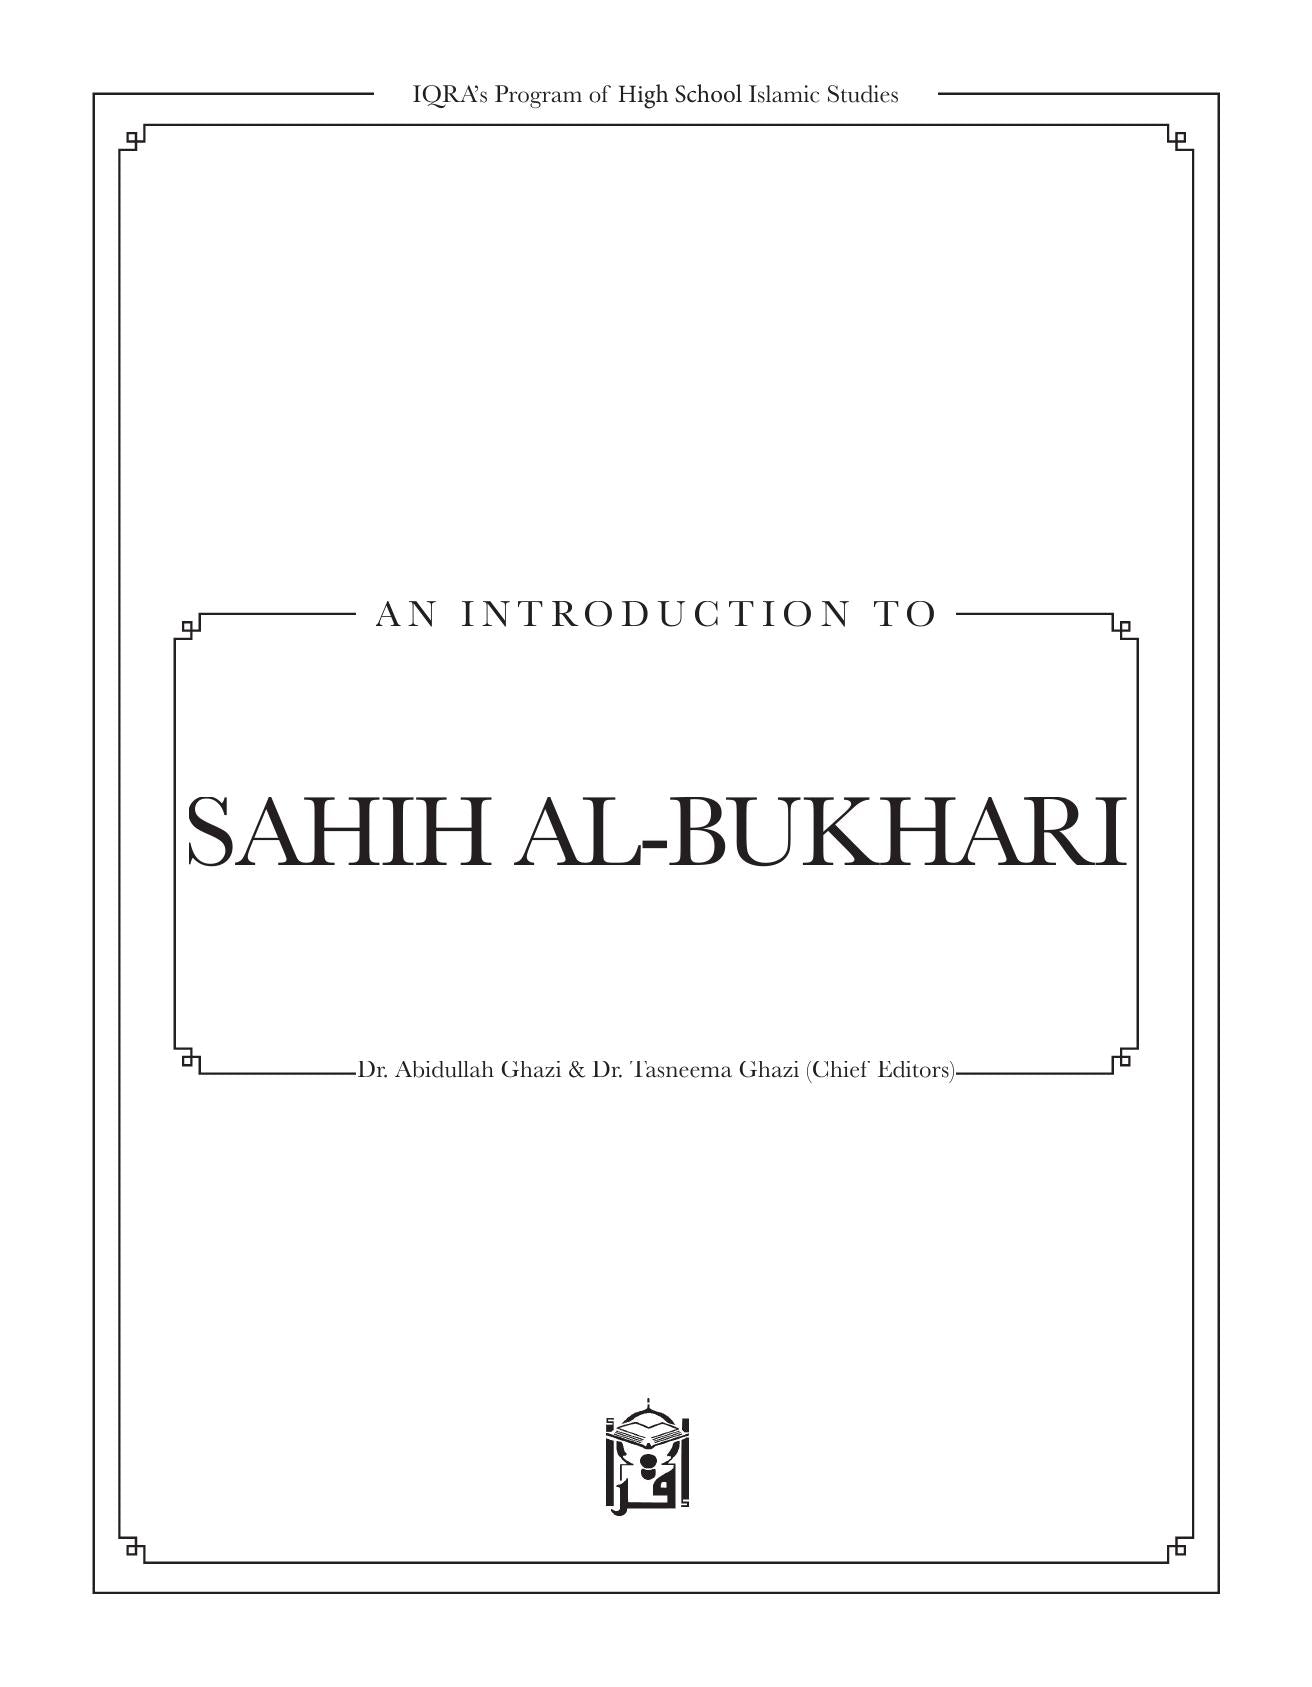 The Sahih of Imam Al-Bukhari - Ulum ul-Hadith - Premium Textbook from IQRA' international Educational Foundation - Just $20! Shop now at IQRA Book Center 